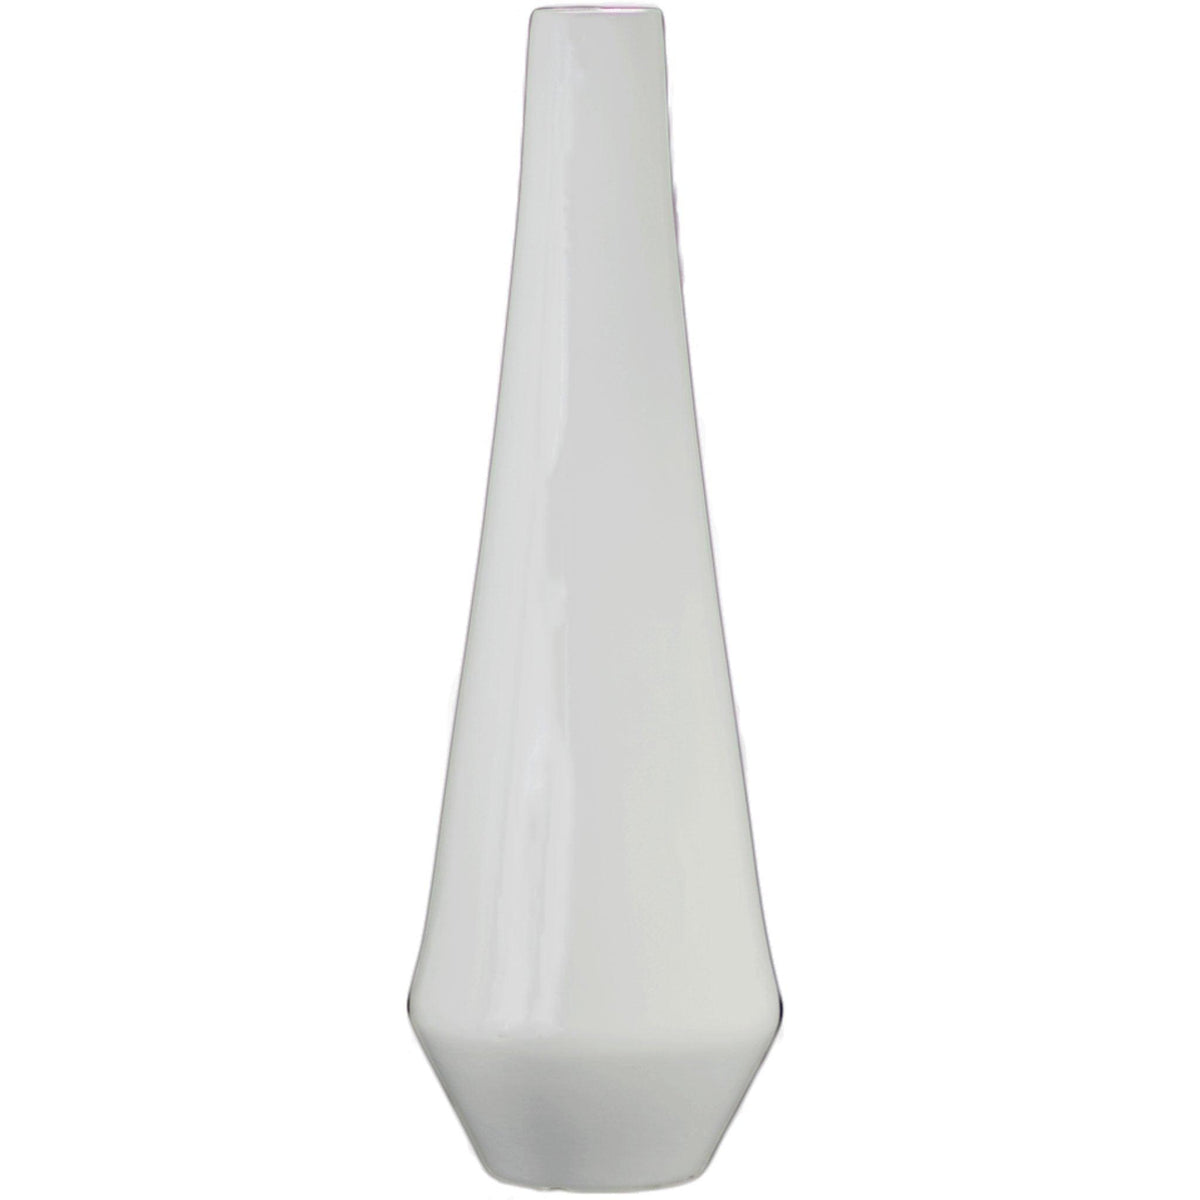 Lee Display's brand new contemporary white ceramic vases on sale now at leedisplay.com